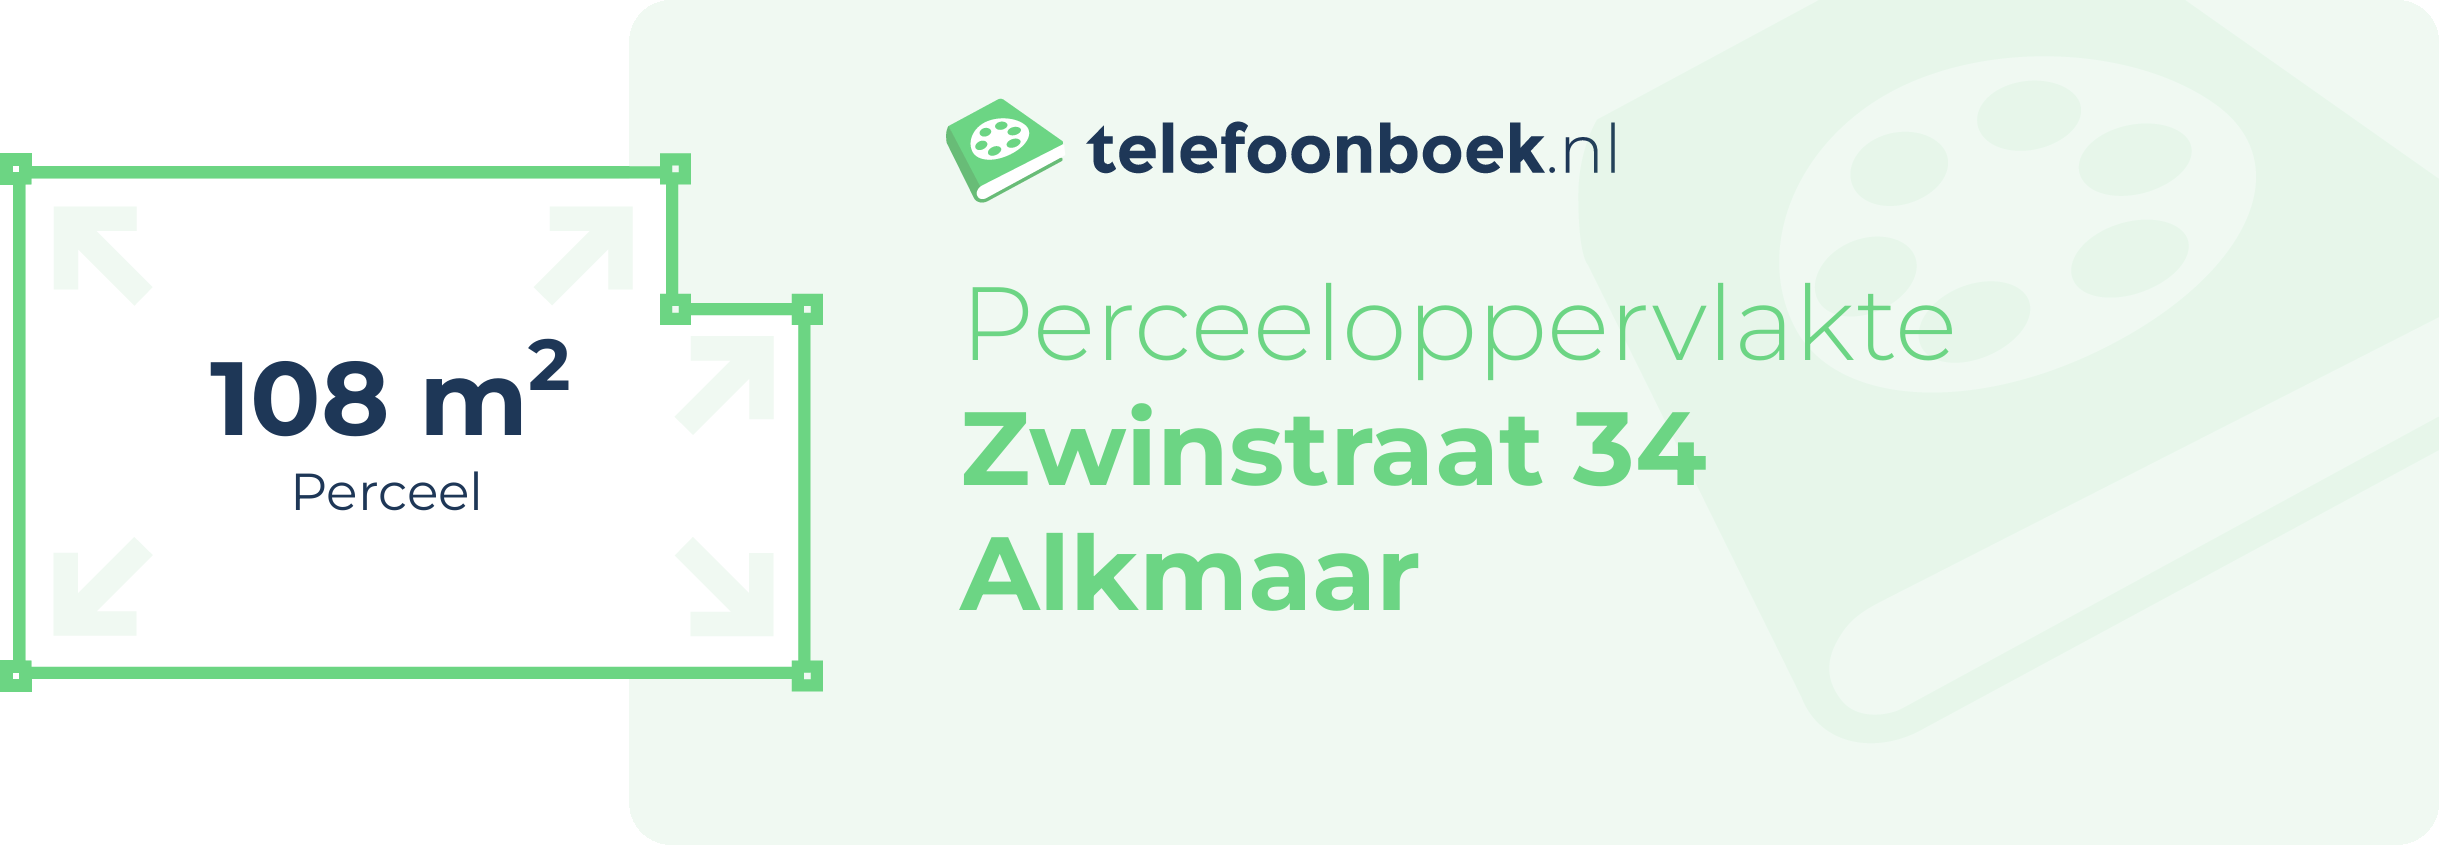 Perceeloppervlakte Zwinstraat 34 Alkmaar